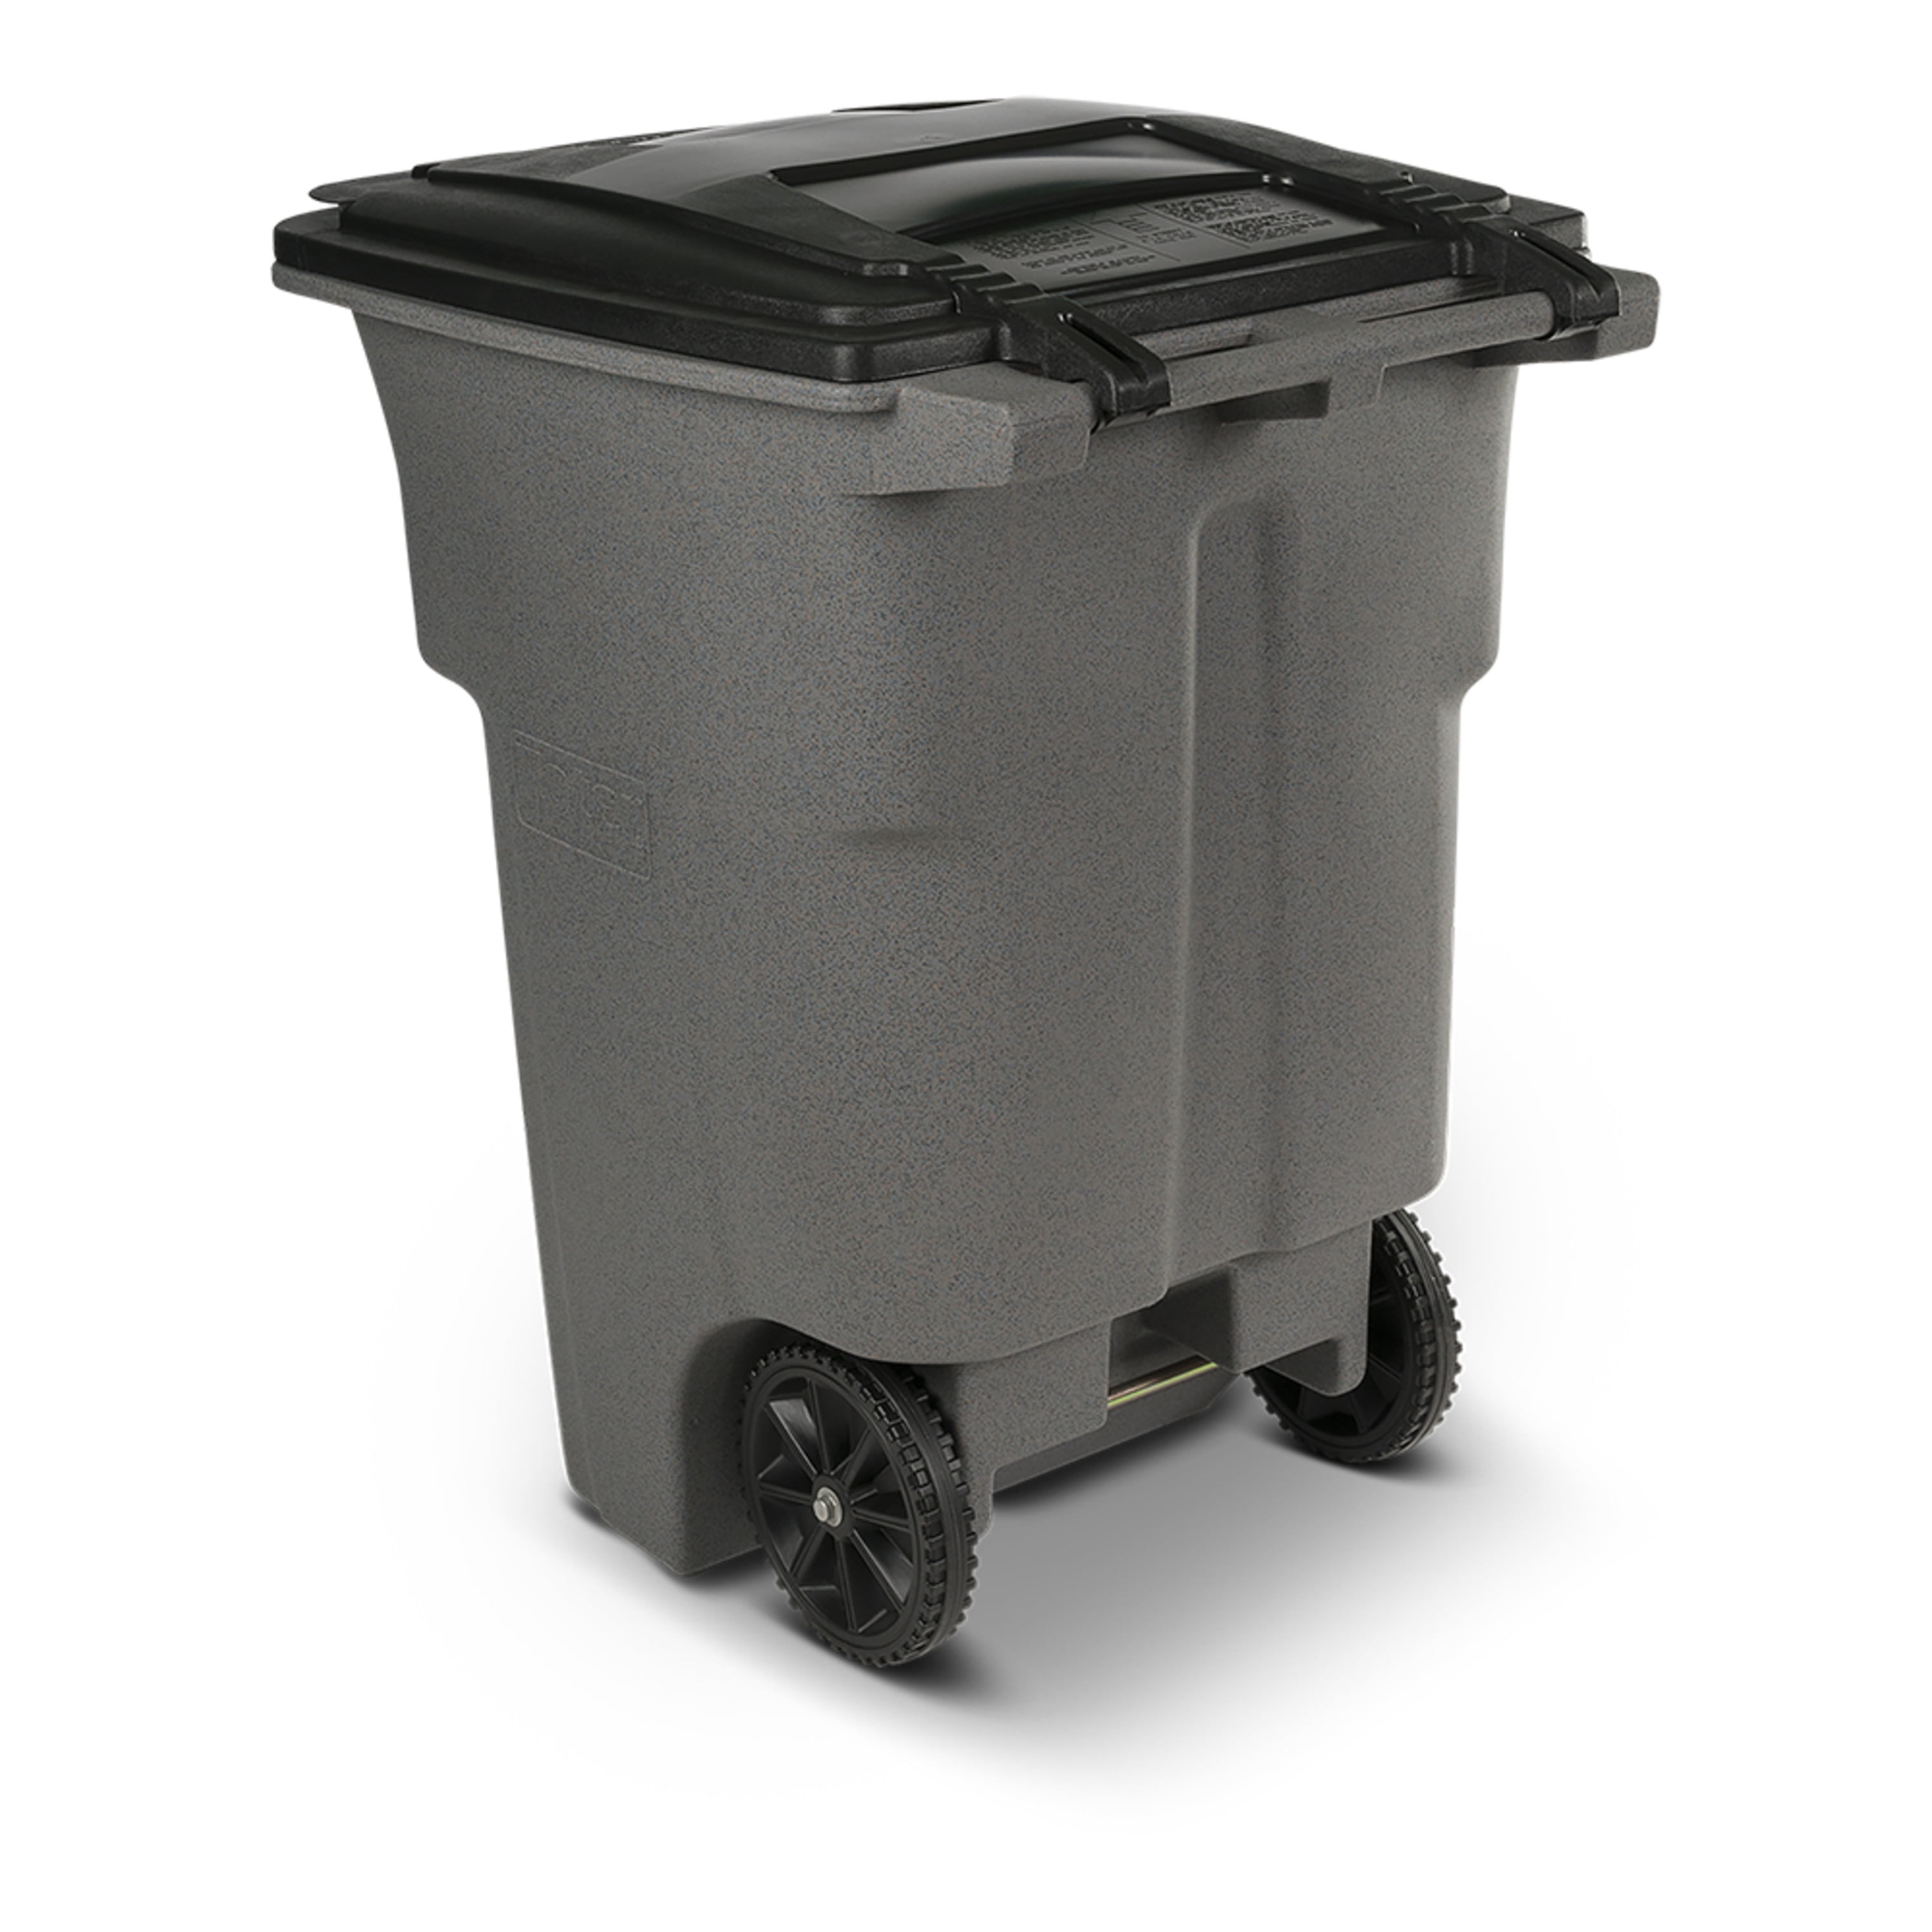 Toter Heavy Duty Two-Wheel Trash Cart w/Casters, 96 Gallon